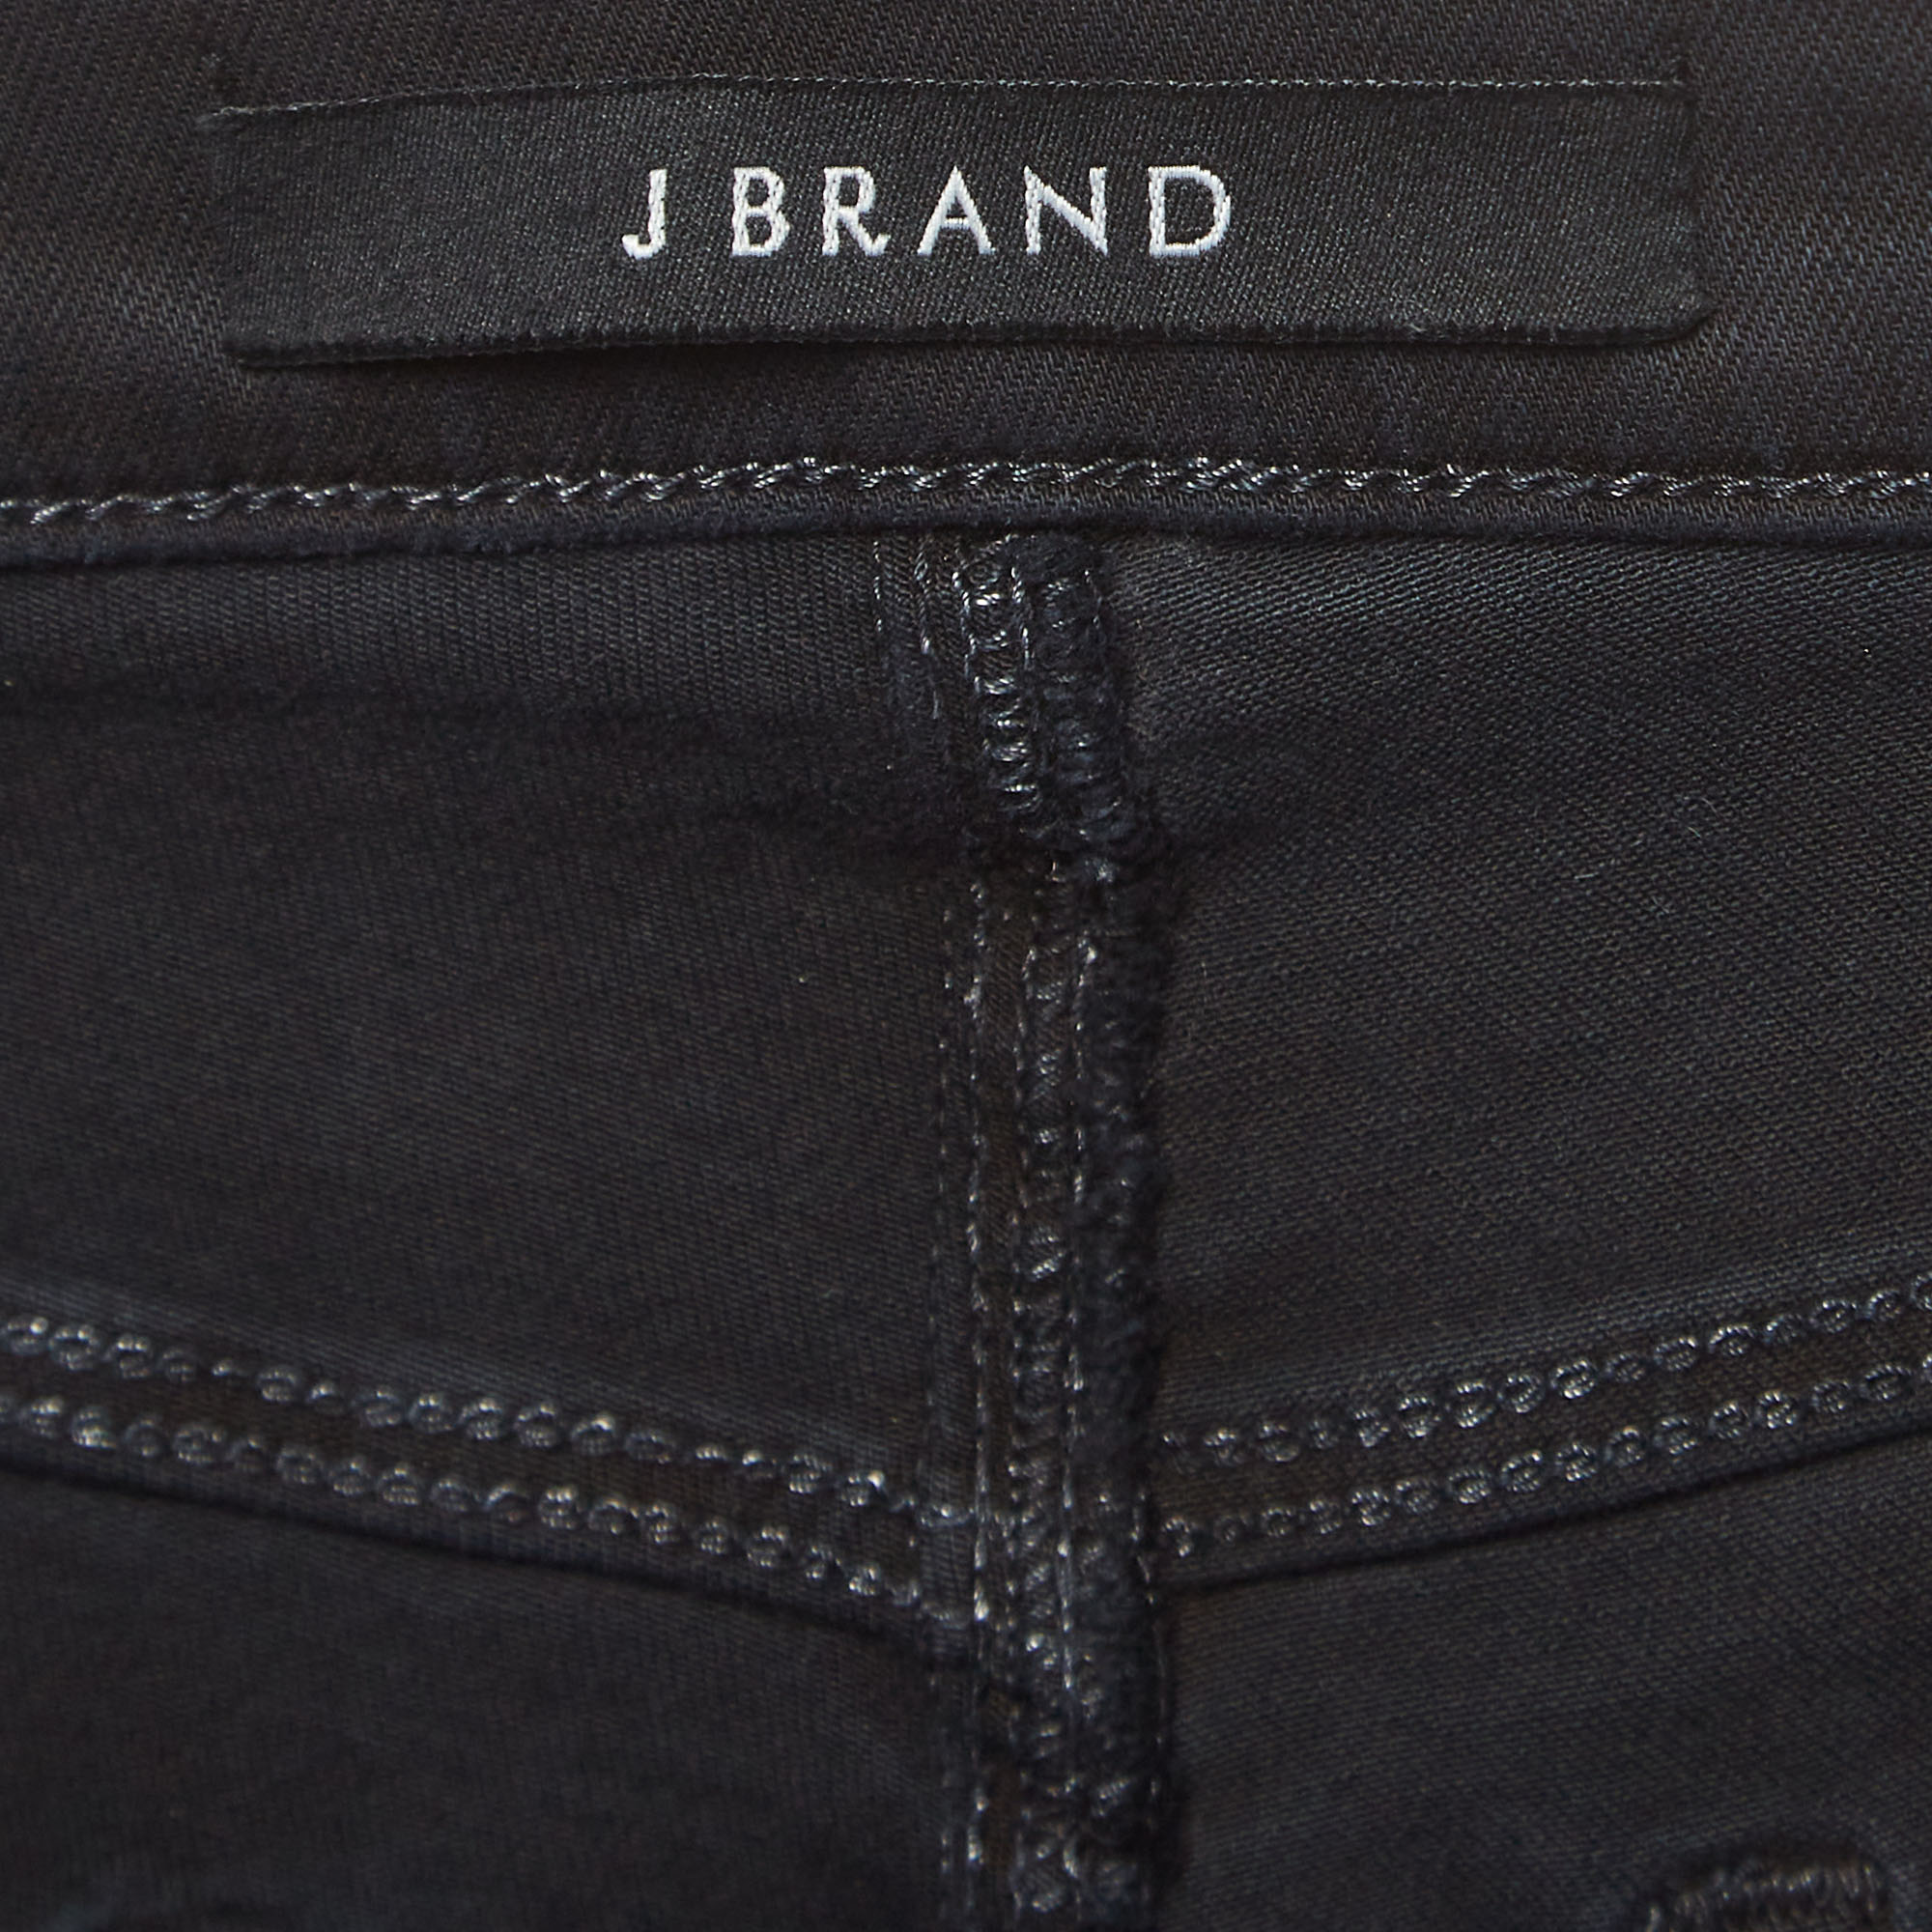 J Brand Navy Blue Washed Denim Skinny Jeans M Waist 29